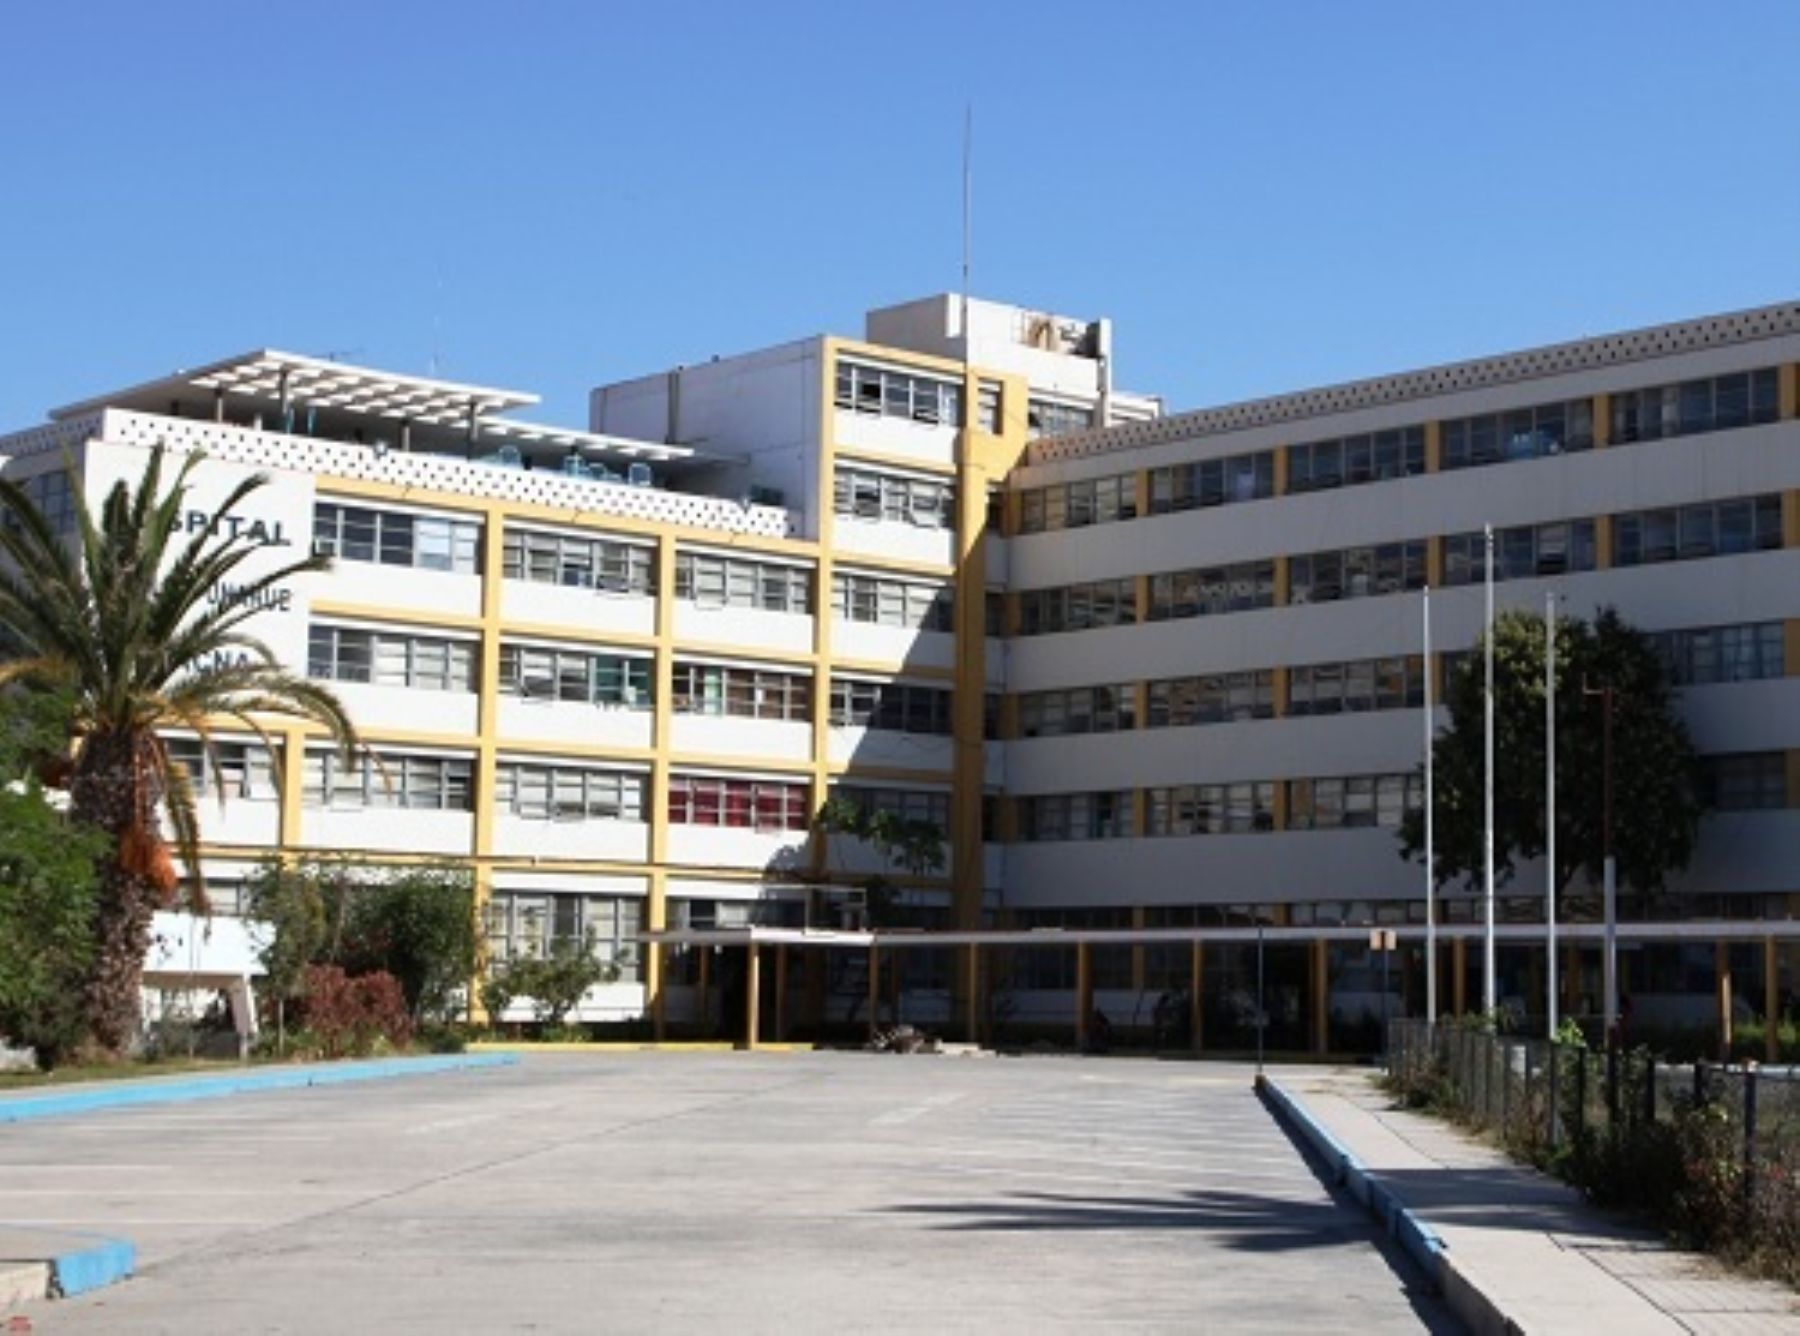 Peruvian hospital.